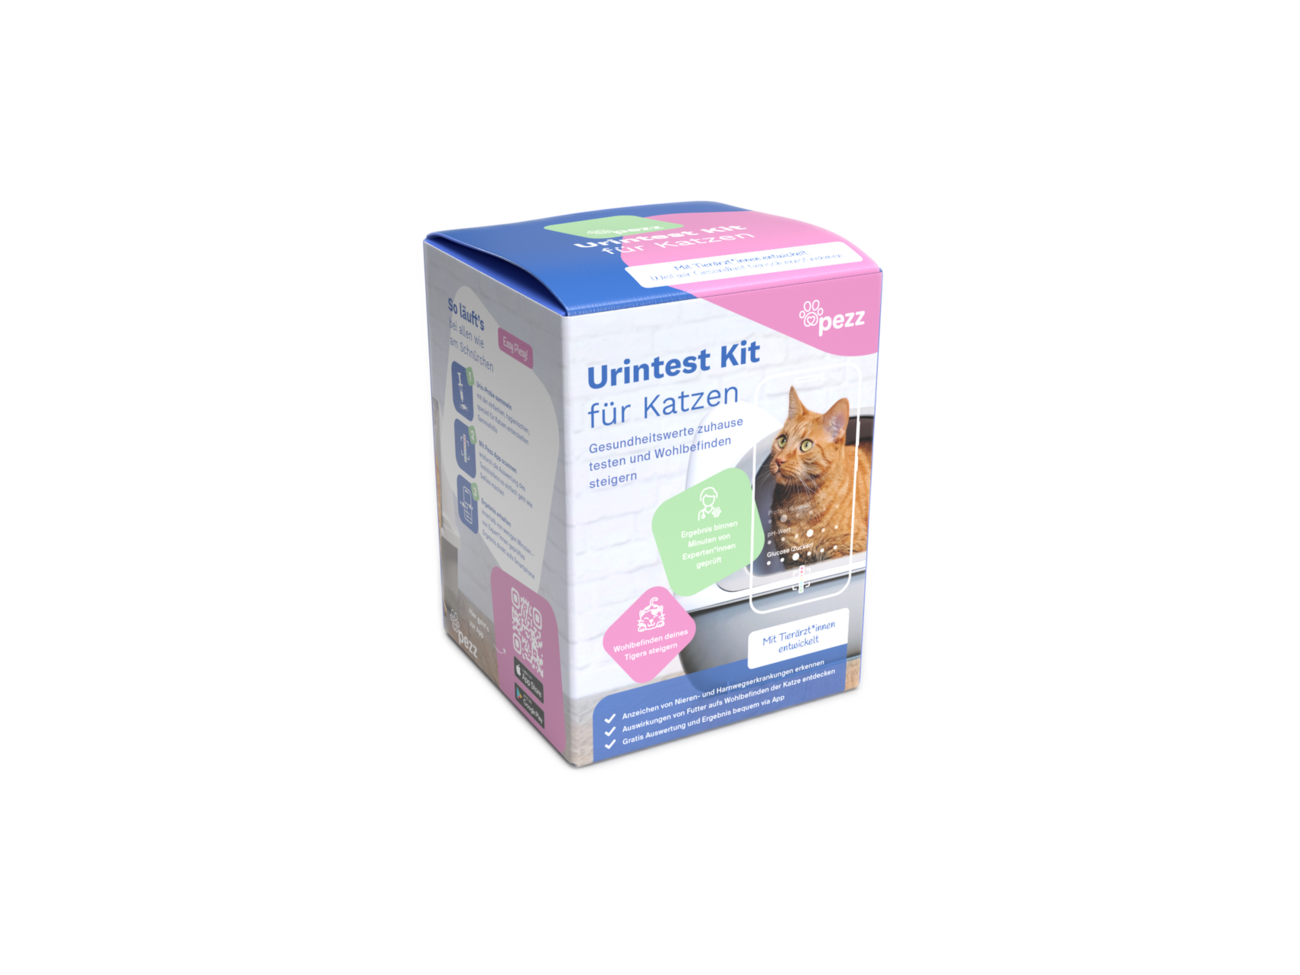 Pezz life | Urintest Kit für Katzen